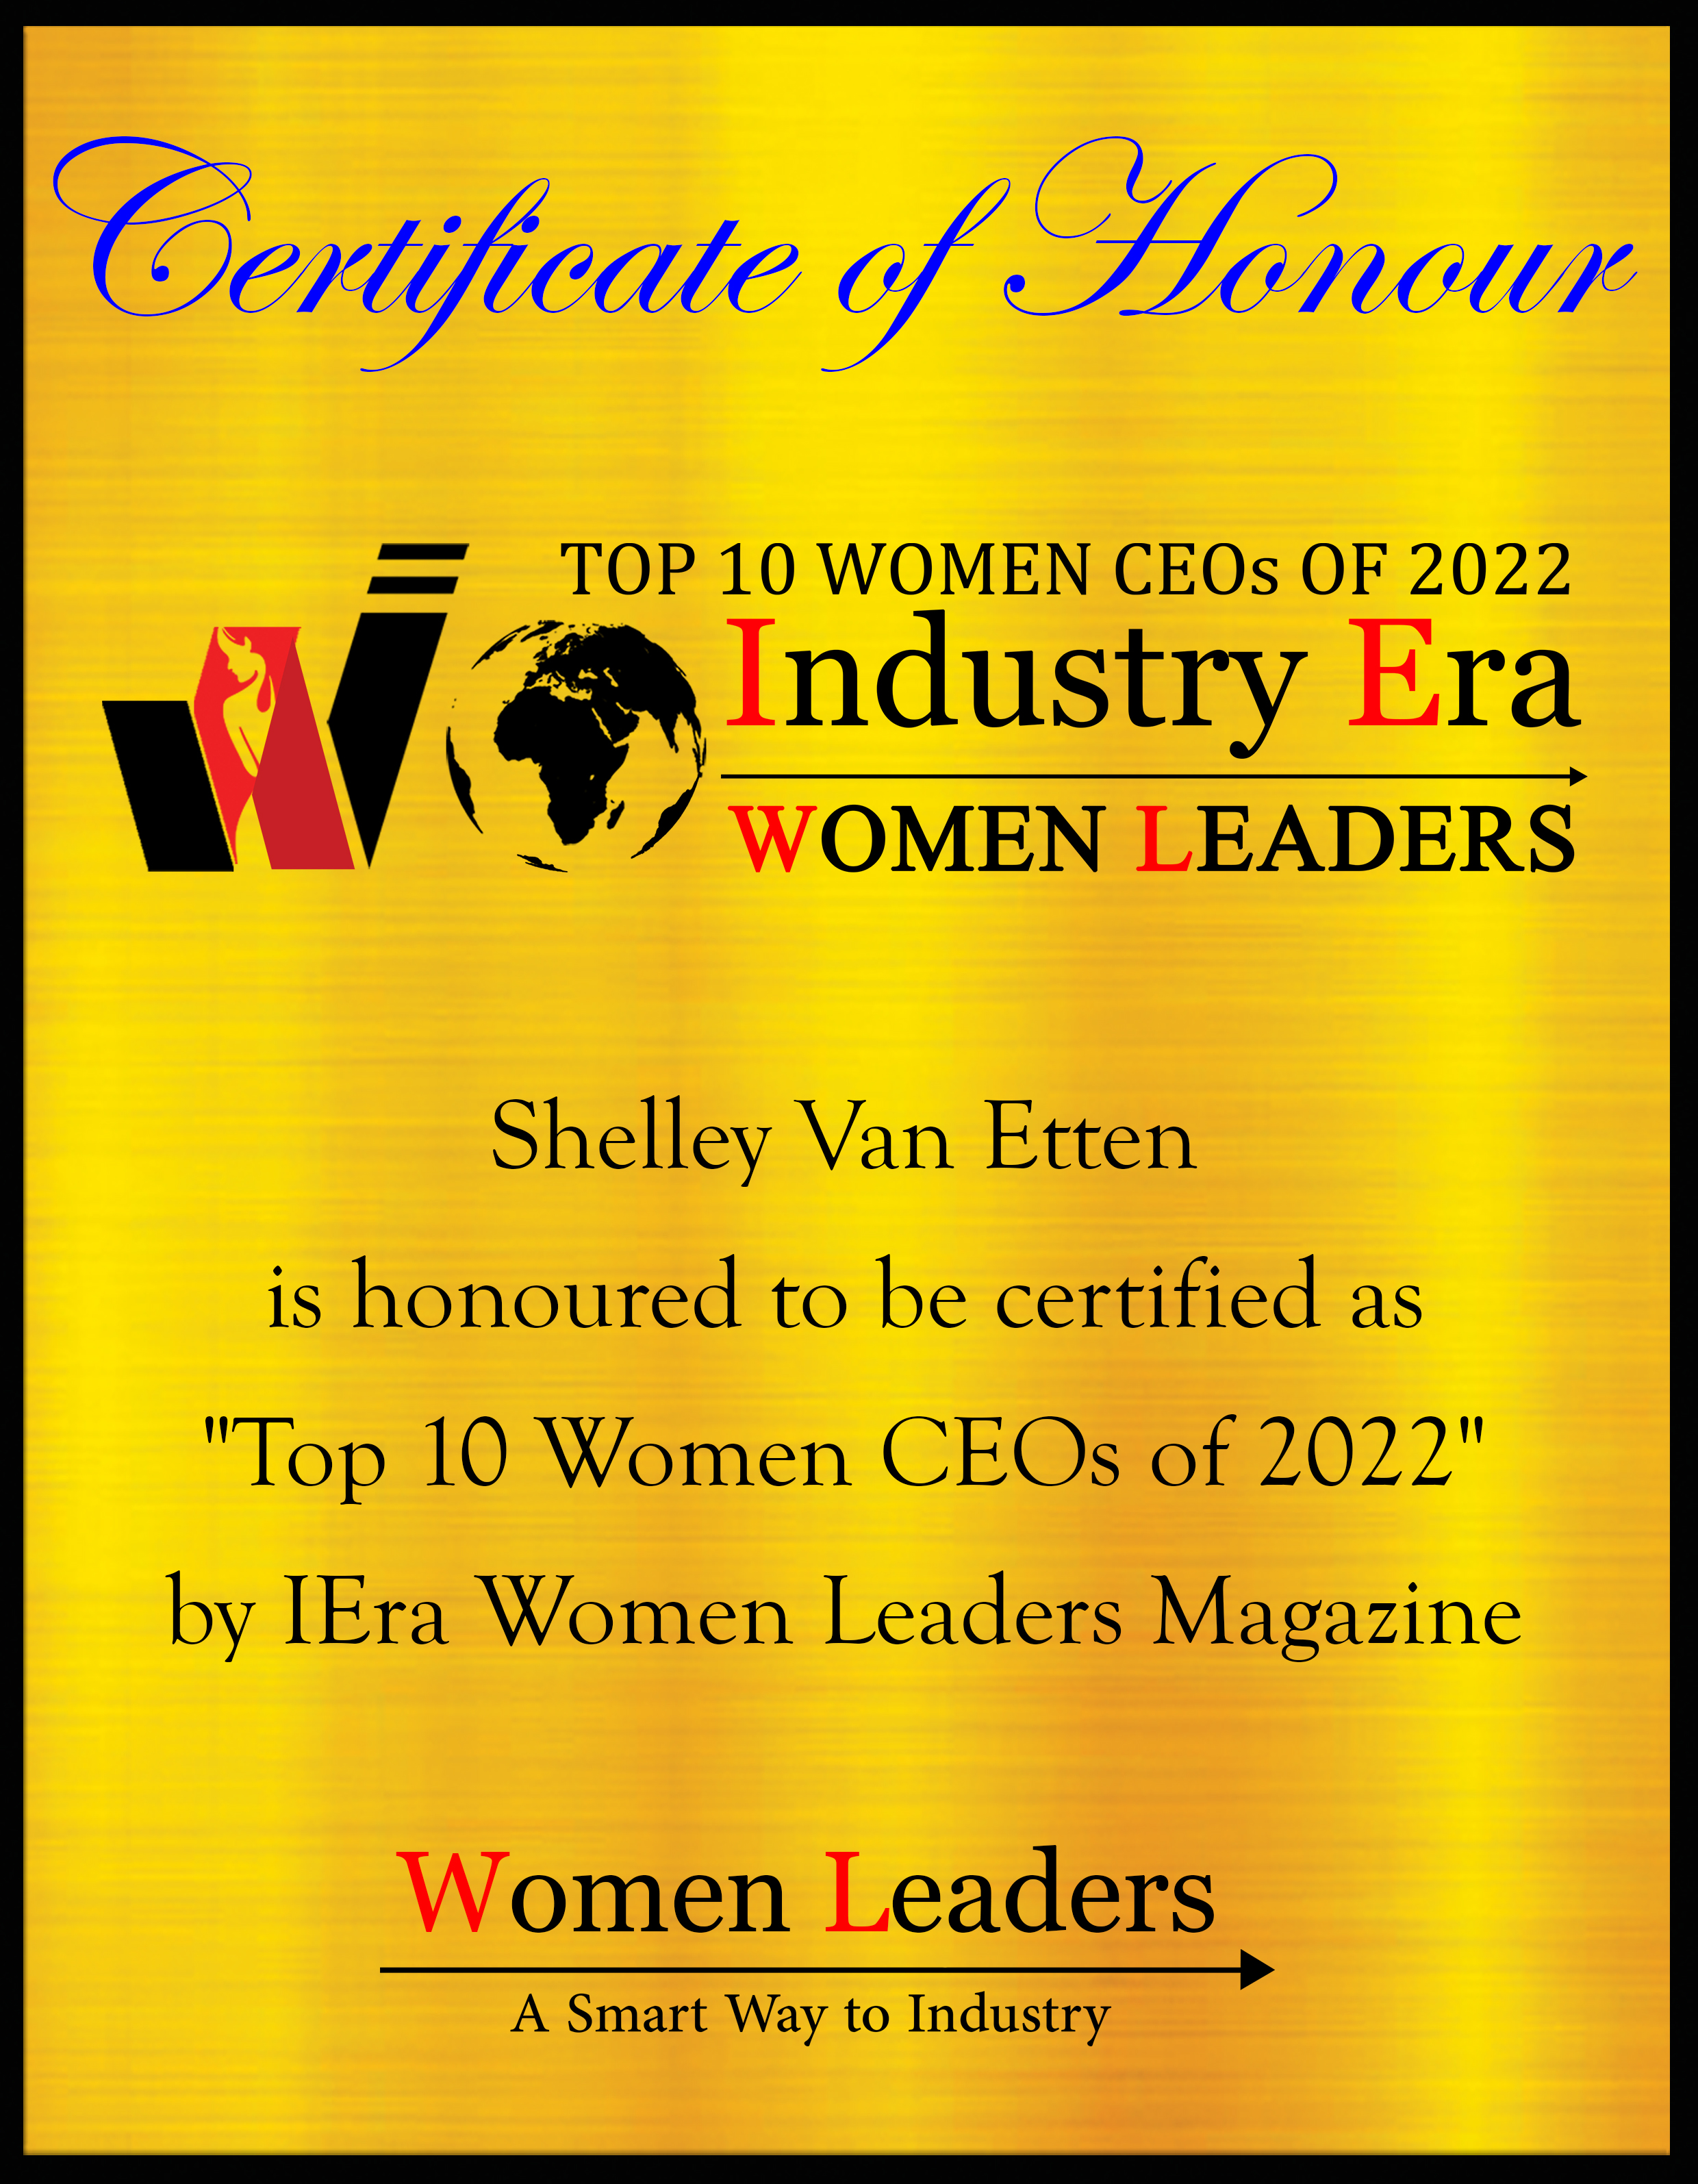 Shelley Van Etten, CEO of WLT Software Enterprises, Top 10 Women CEOs of 2022